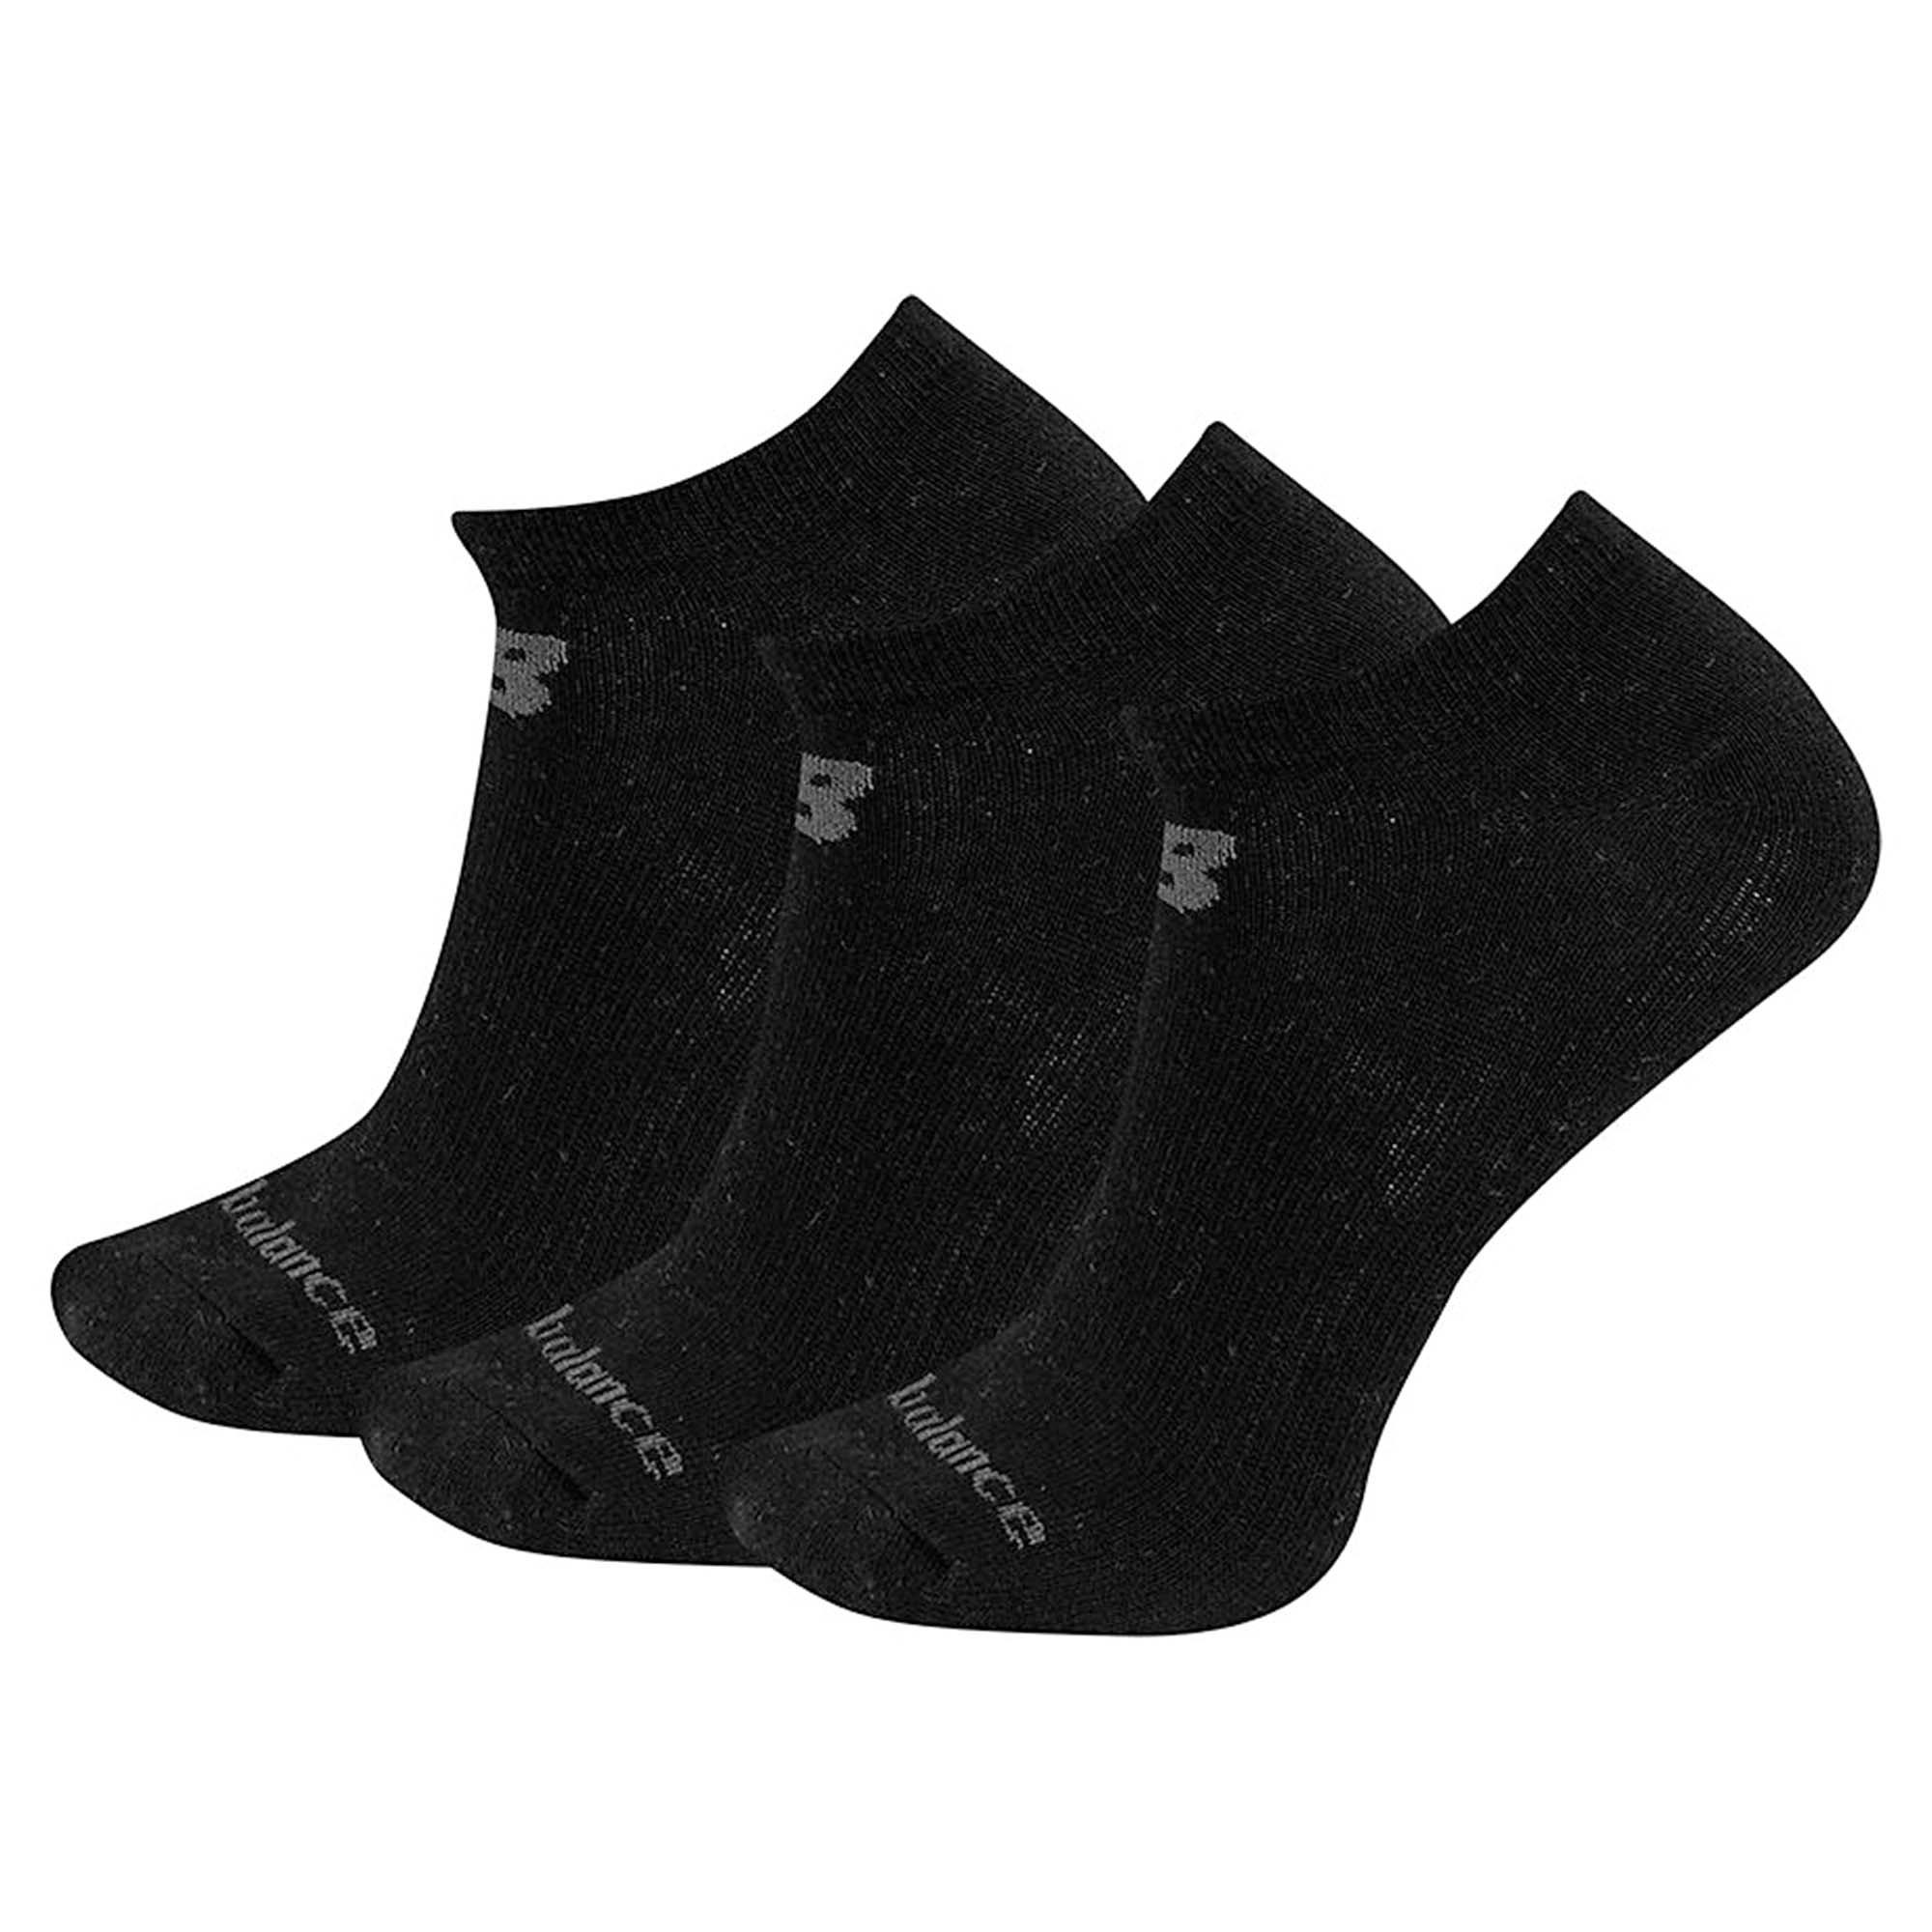 New Balance | Performance Cotton Flat Knit No Show Socks 3 Pack ...